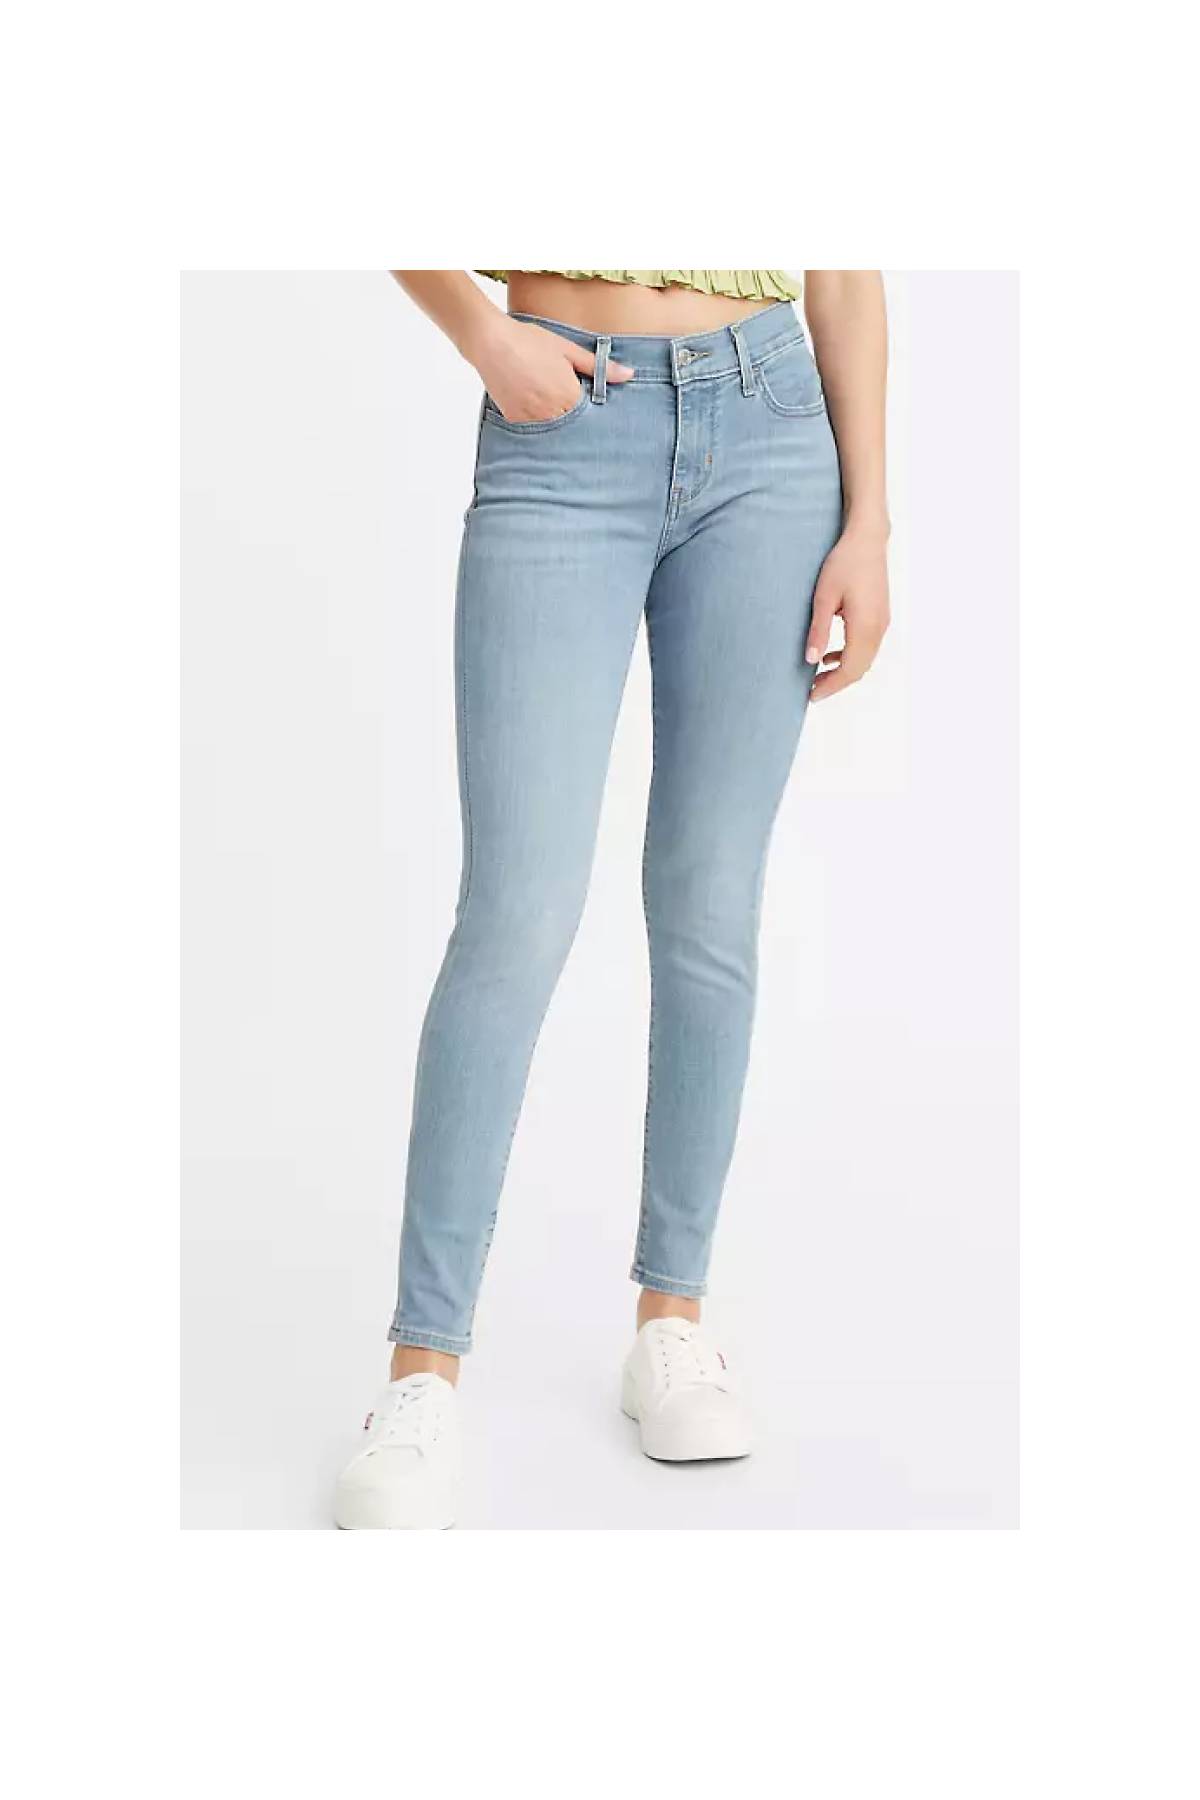 Buy Mid Blue Super Skinny Ankle Length Jeans For Women